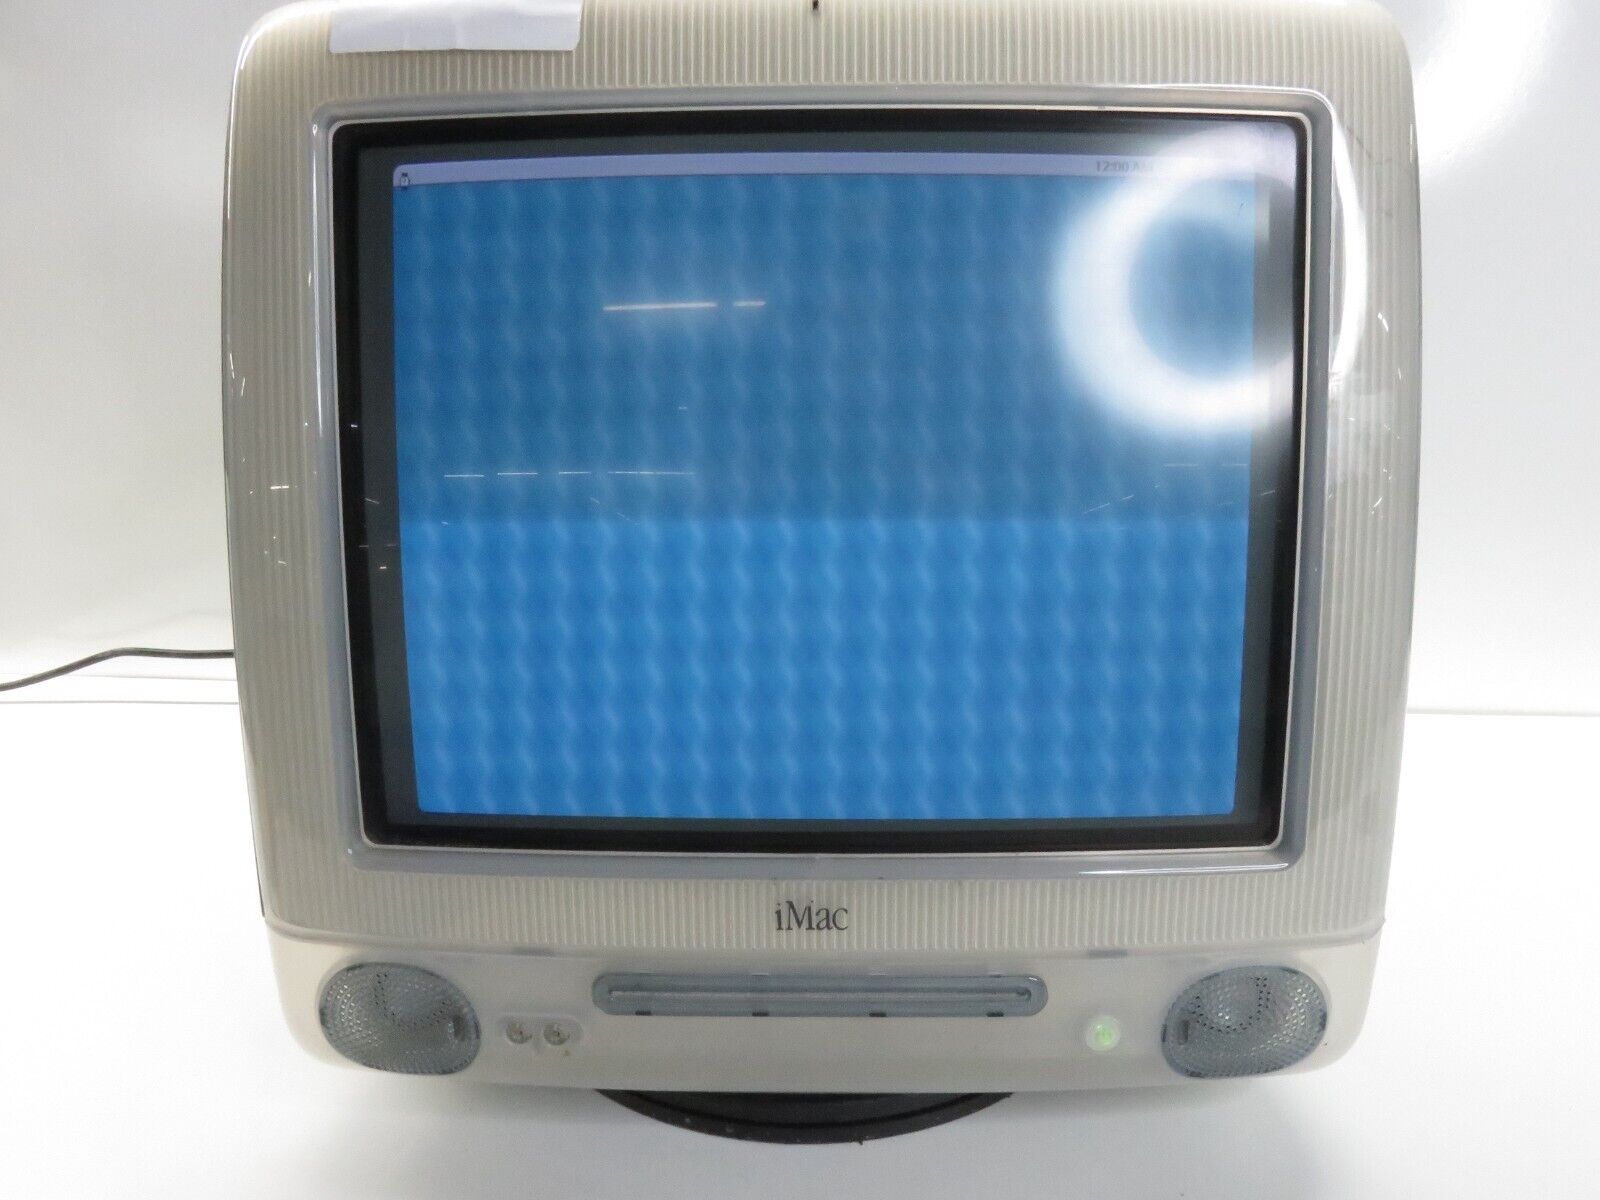 Apple M5521 iMac G3 Graphite PPC G3 500MHz 256MB Ram 28GB HDD Mac OS 9.2.1